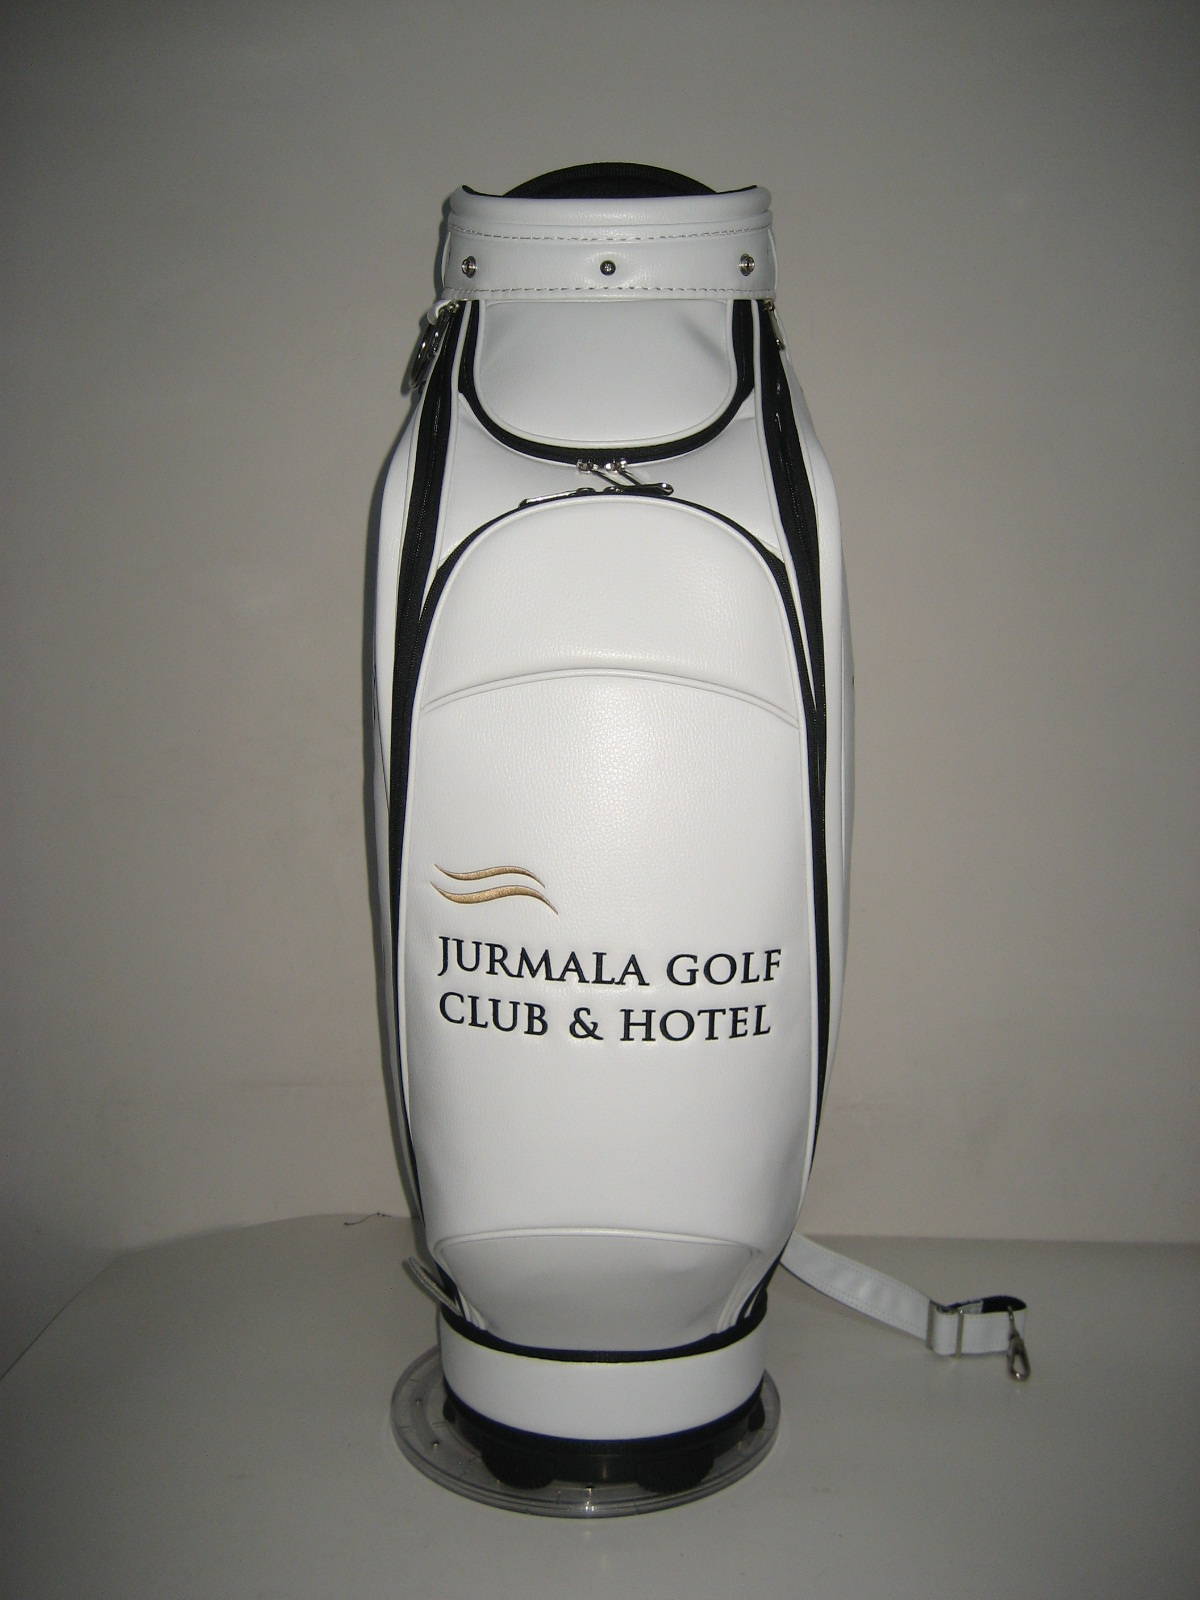 Customised football club golf bags by Golf Custom Bags 170